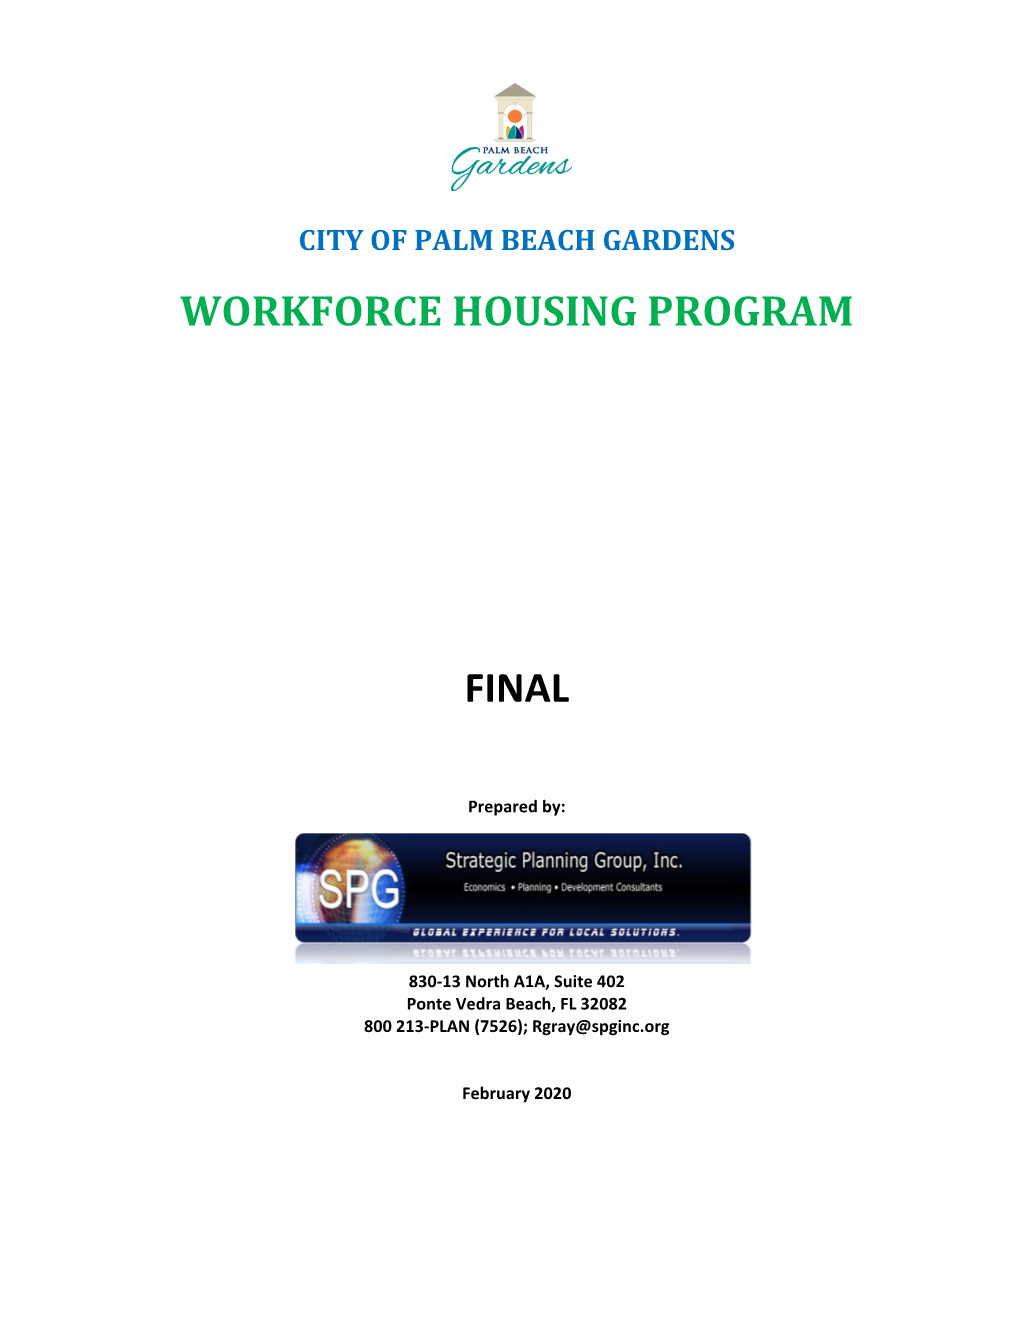 Workforce Housing Program Final